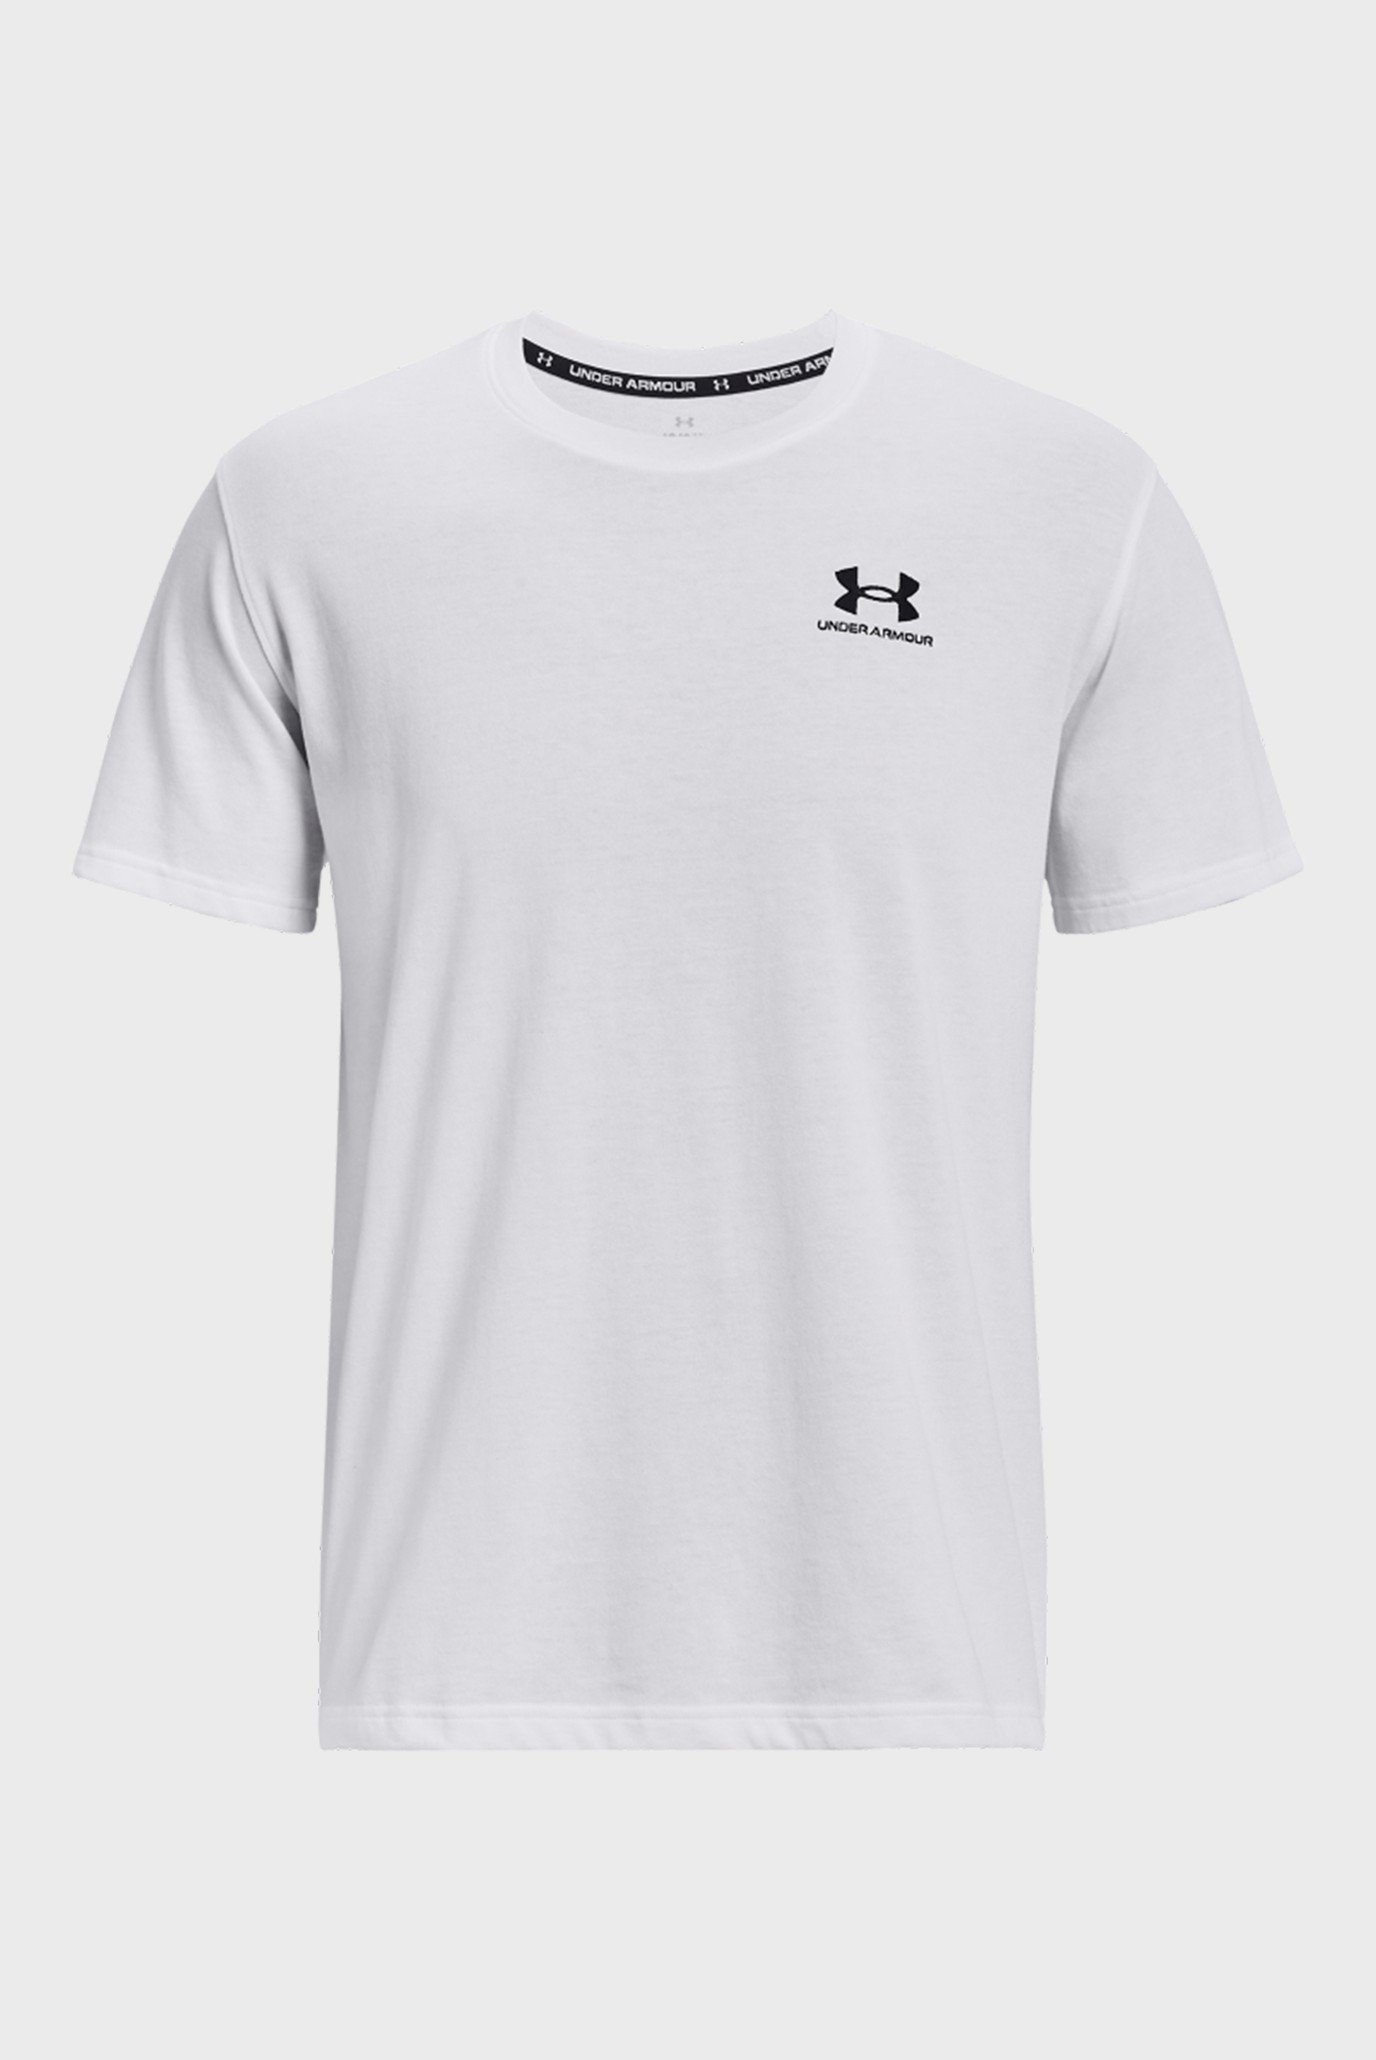 Мужская белая футболка UA LOGO EMB HEAVYWEIGHT 1